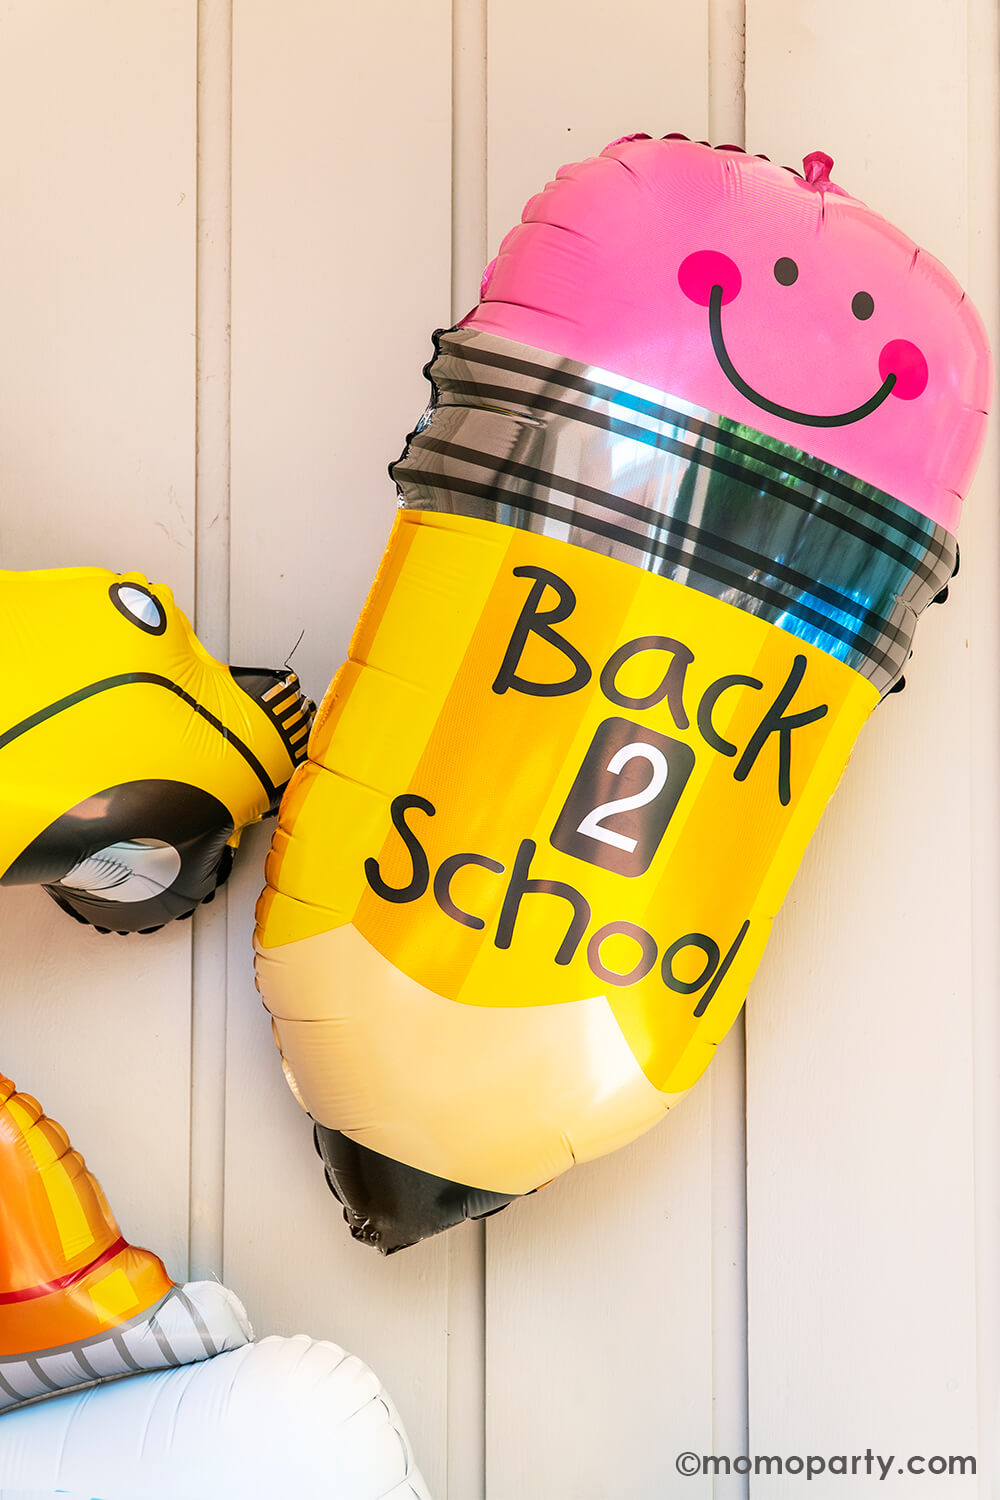 betalilc back 2 school foil balloon in a cute happy pencil shape